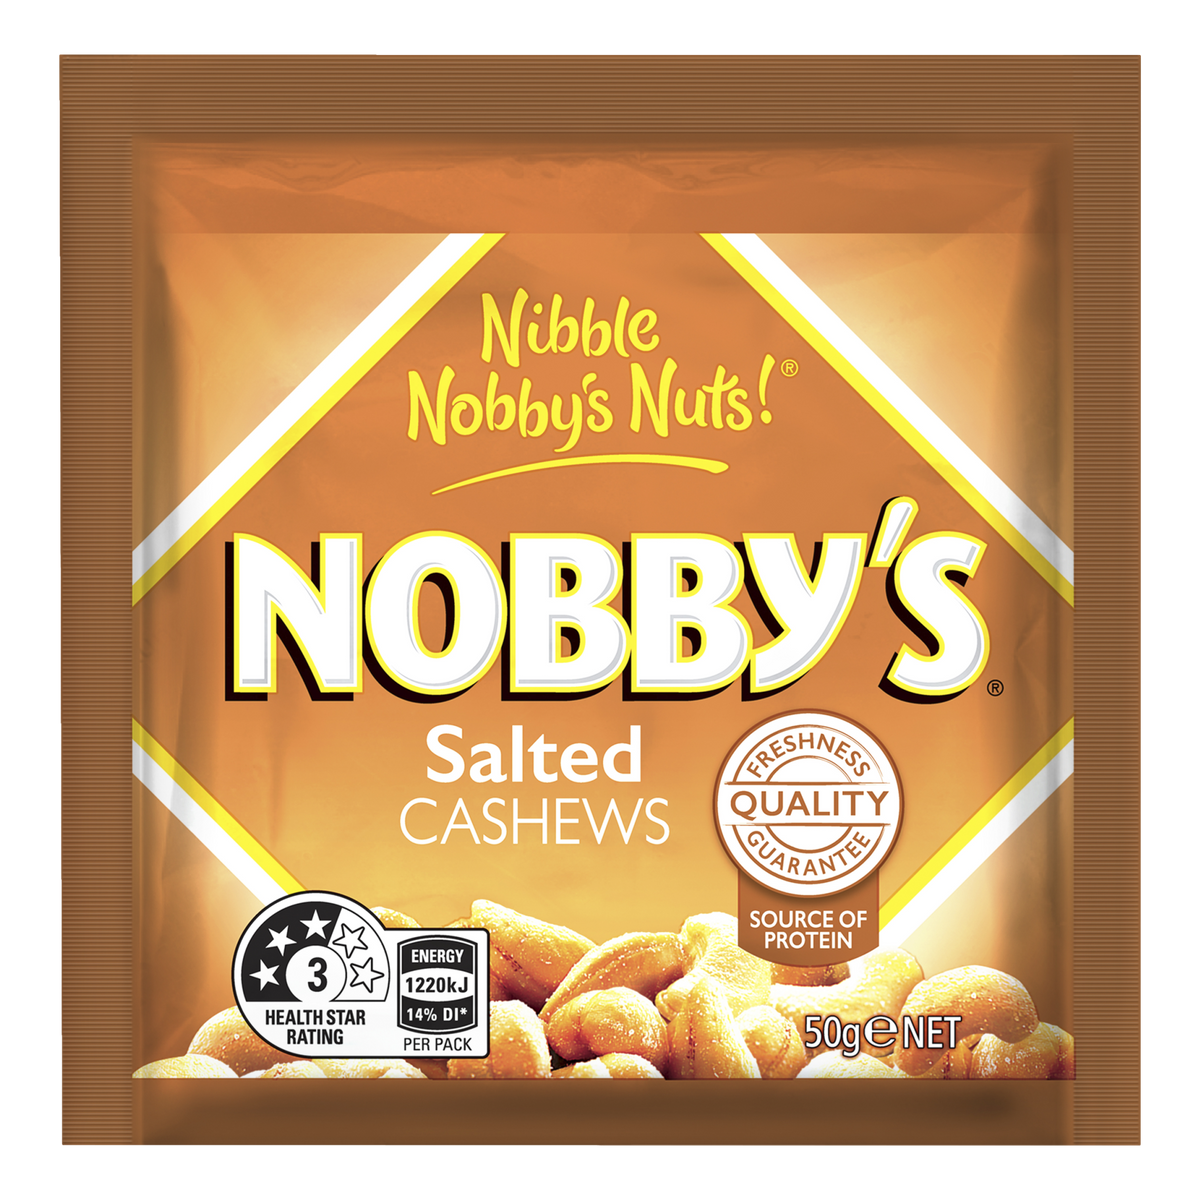 Nobby's Salted Cashews 50g